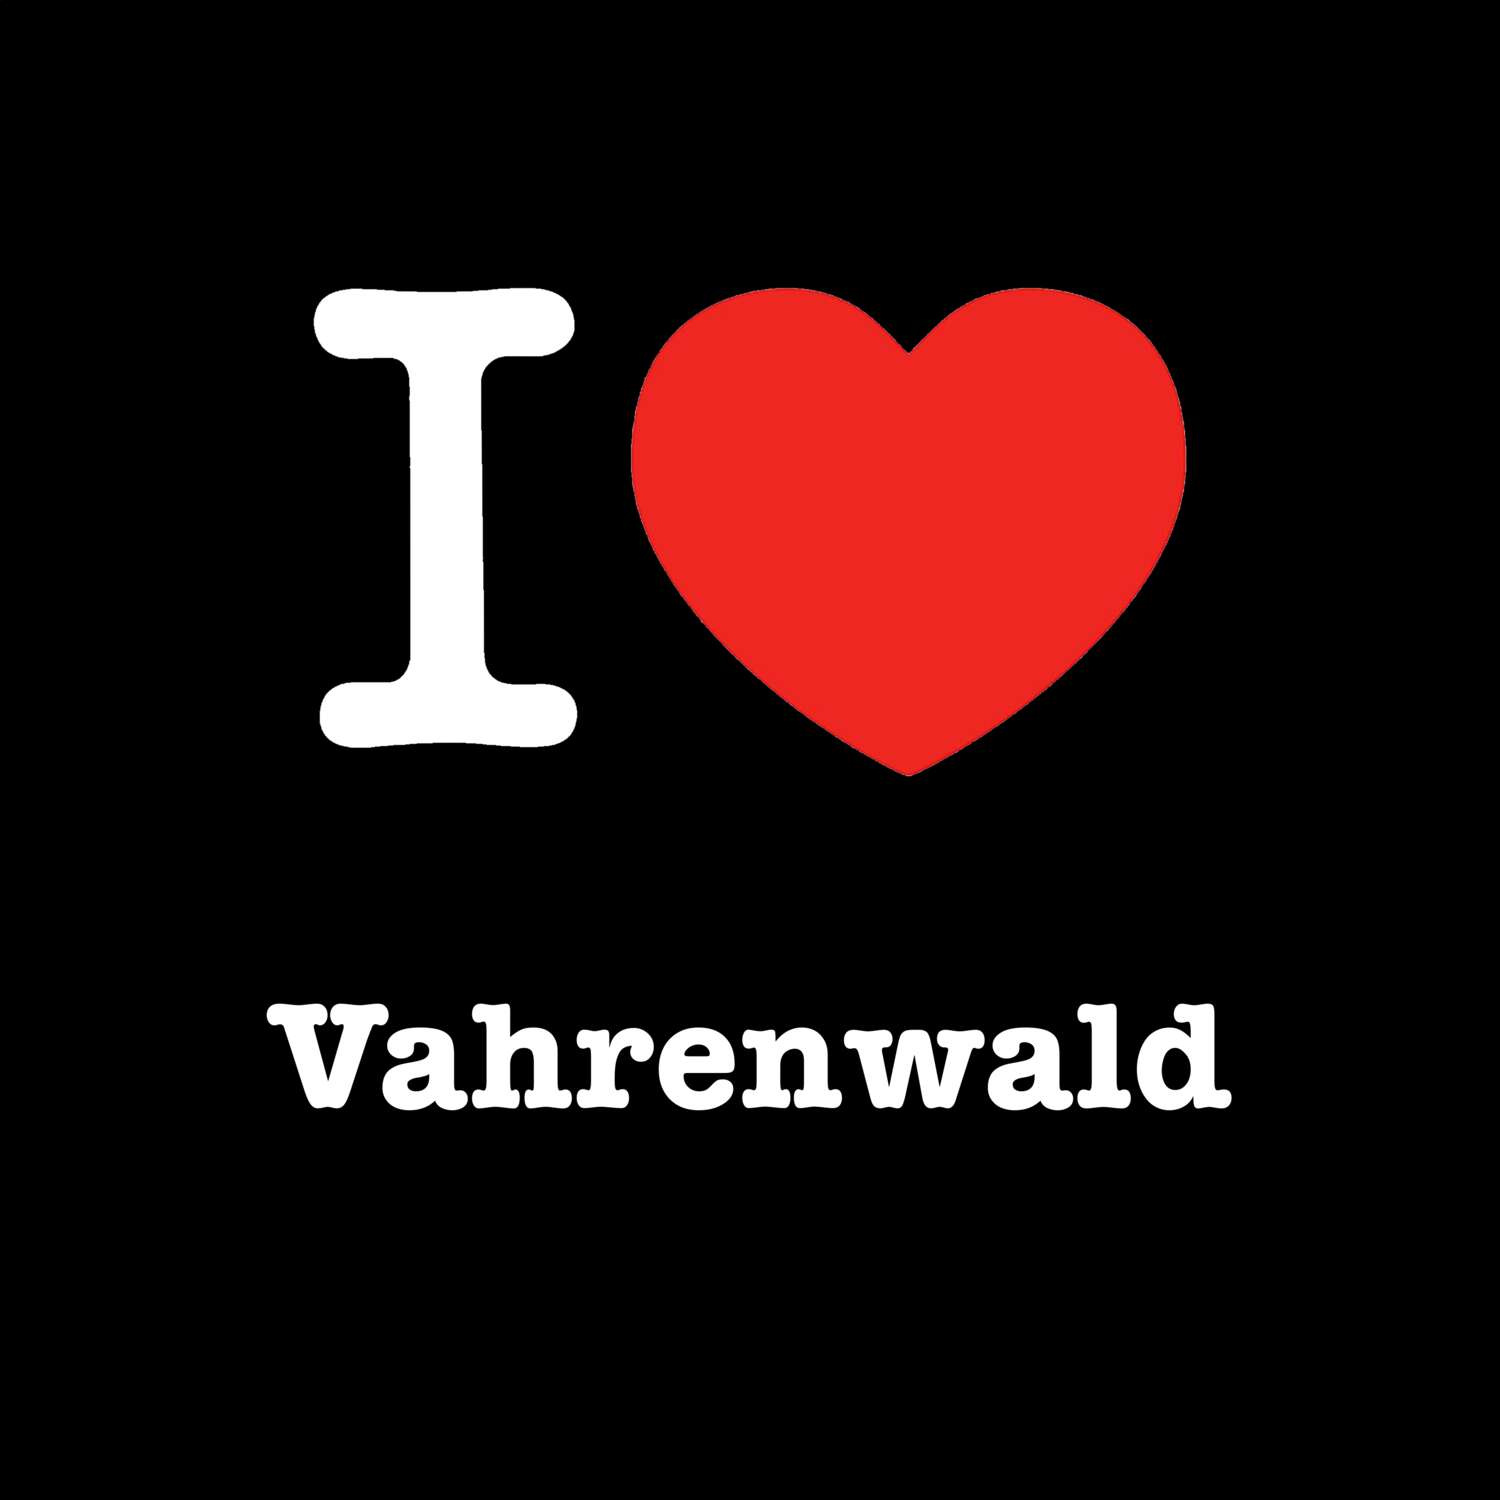 Vahrenwald T-Shirt »I love«